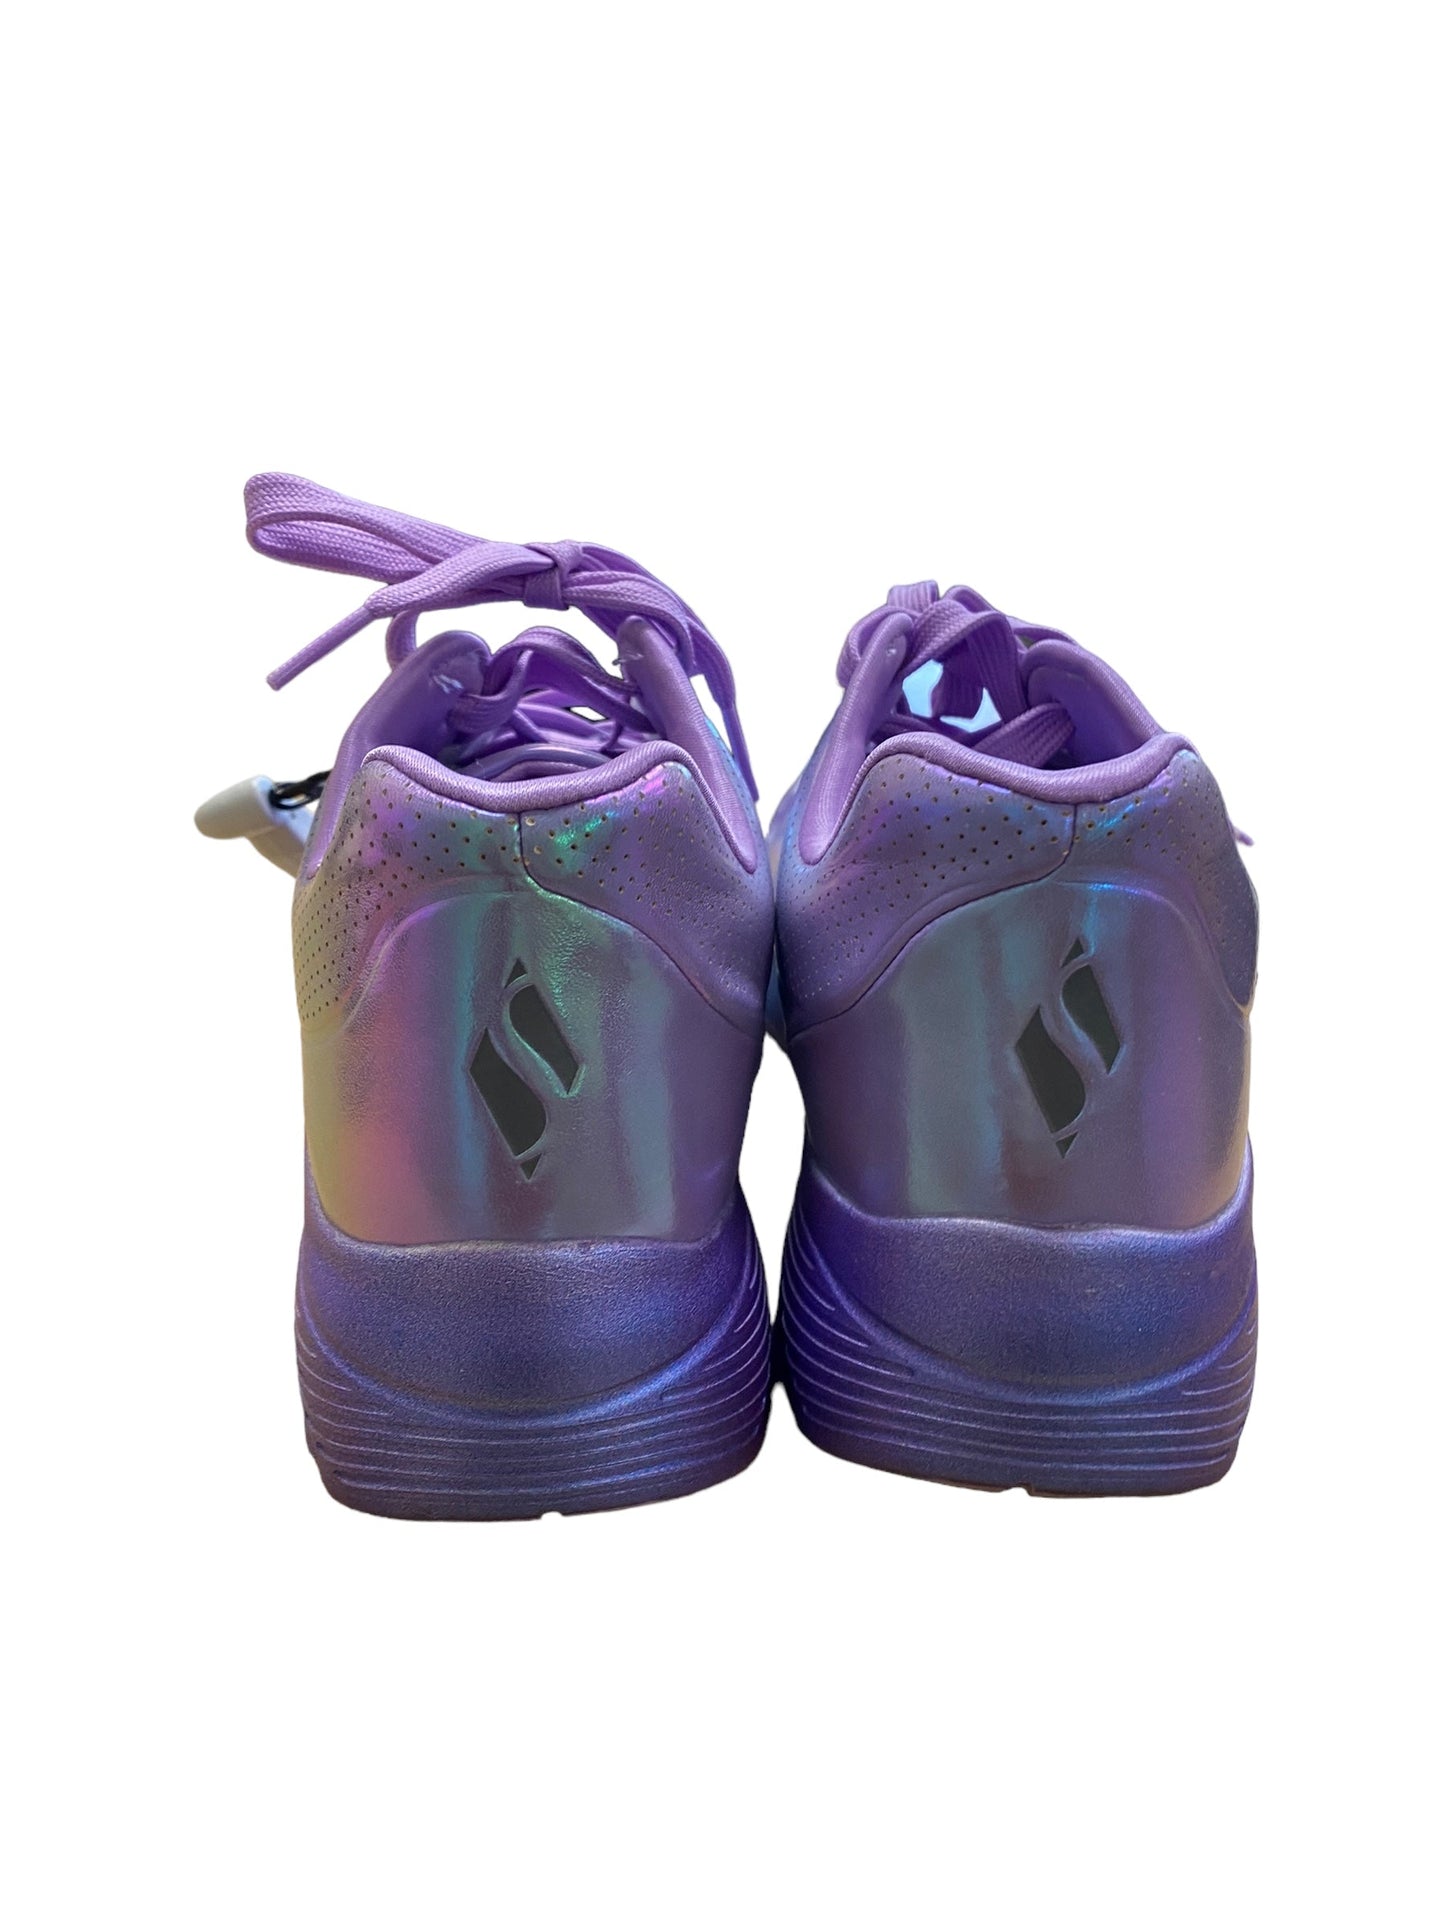 Purple Shoes Athletic Skechers, Size 7